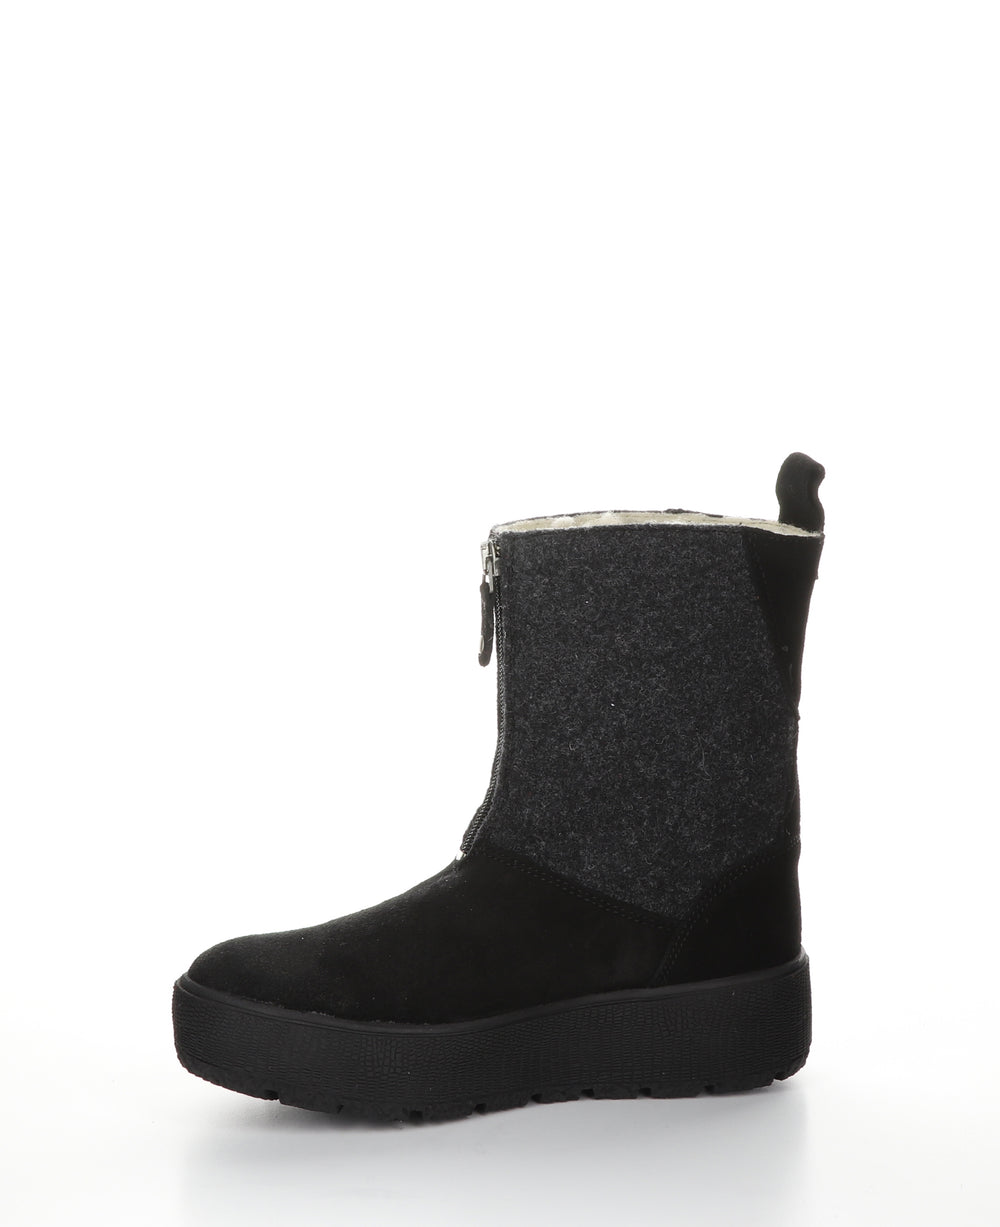 IGNITE Black Zip Up Boots|IGNITE Bottes avec Fermeture Zippée in Noir